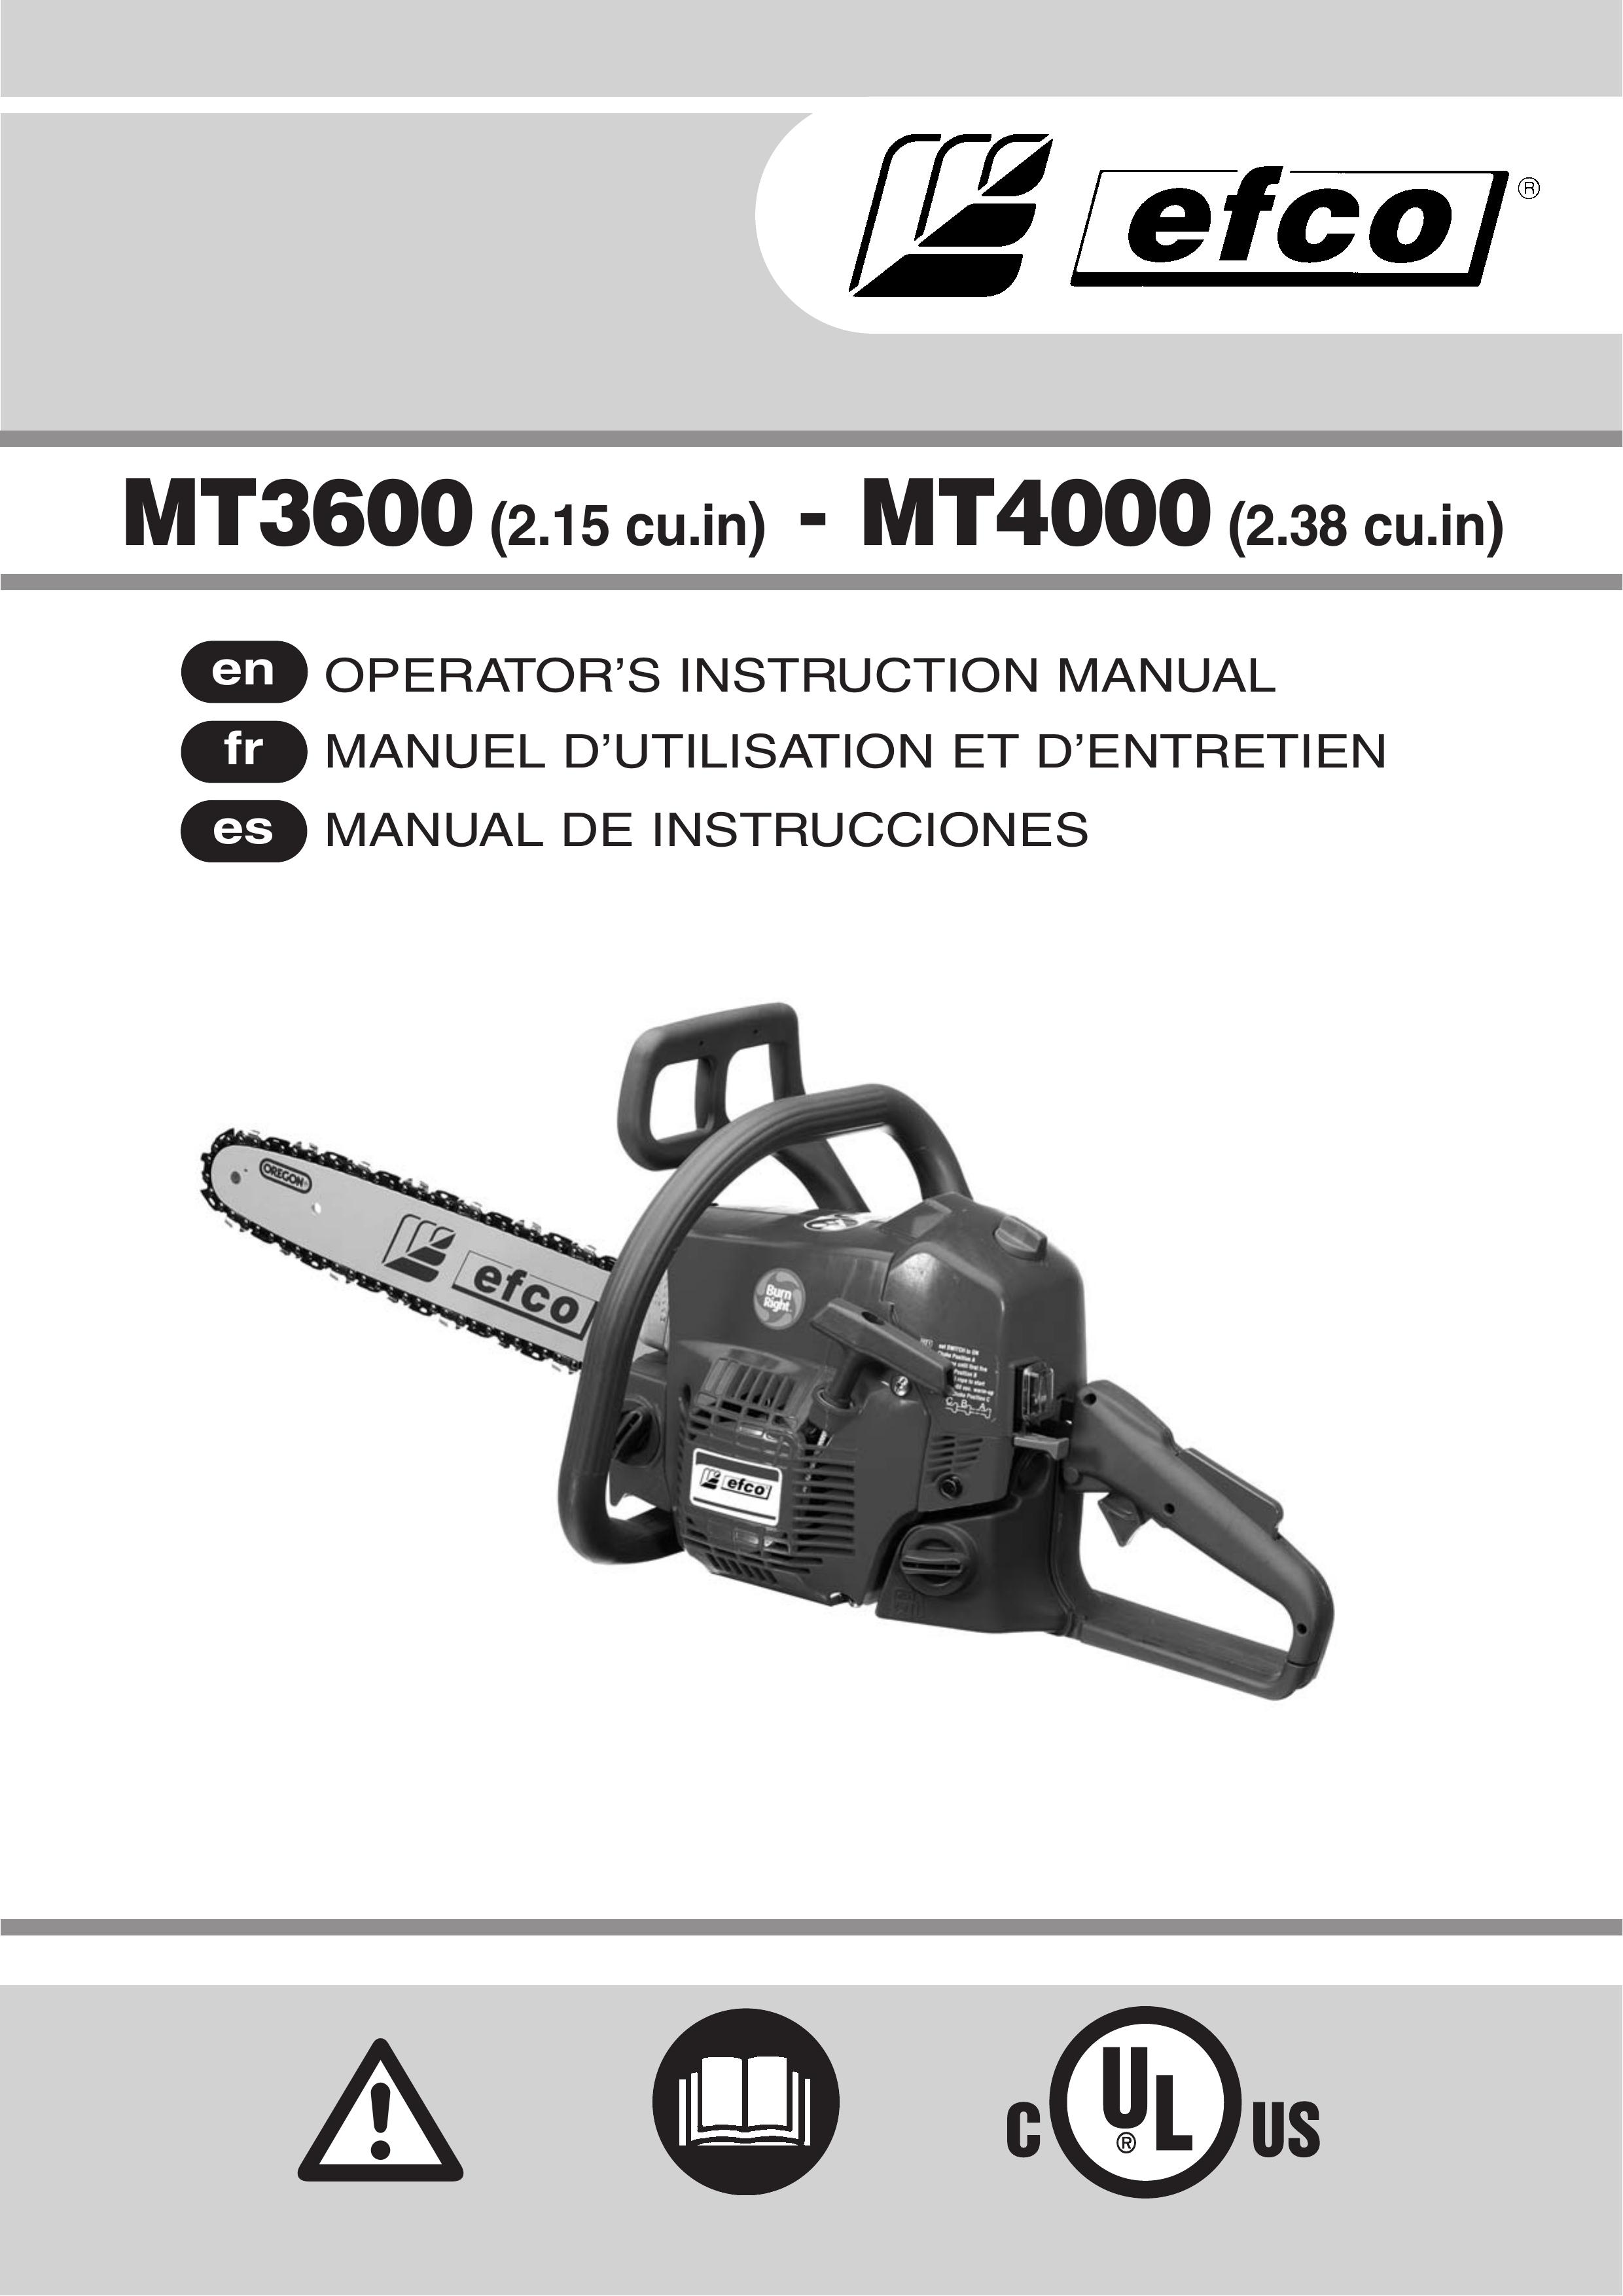 EMAK MT4000 Chainsaw User Manual